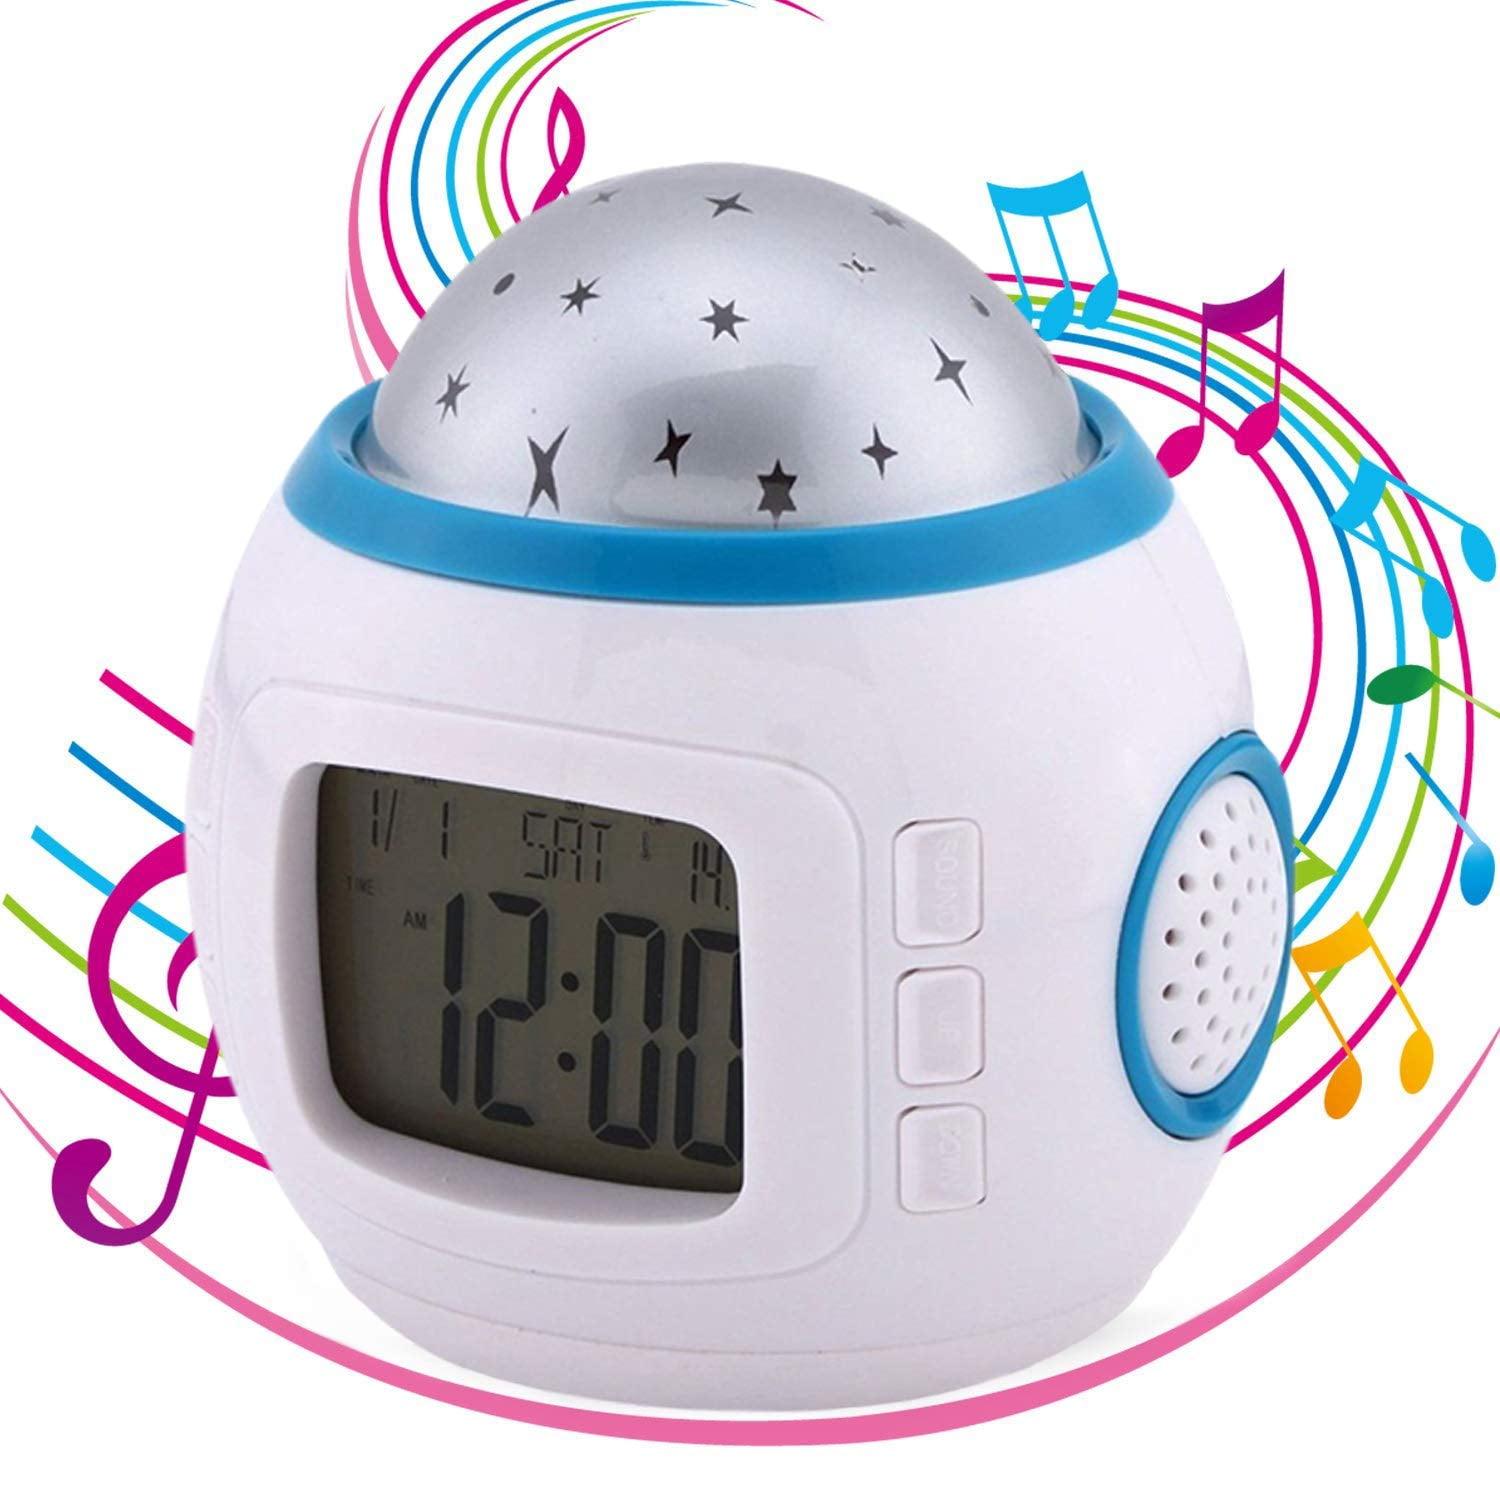 Jayol Digital Alarm Clock with LED Light LED Alarm Clock Simple Operation Clocks for Bedroom,Office Kitchen Rechargeable Alarm Clocks Light Light -G Stylish Bedside Lamp with Dual Alarm